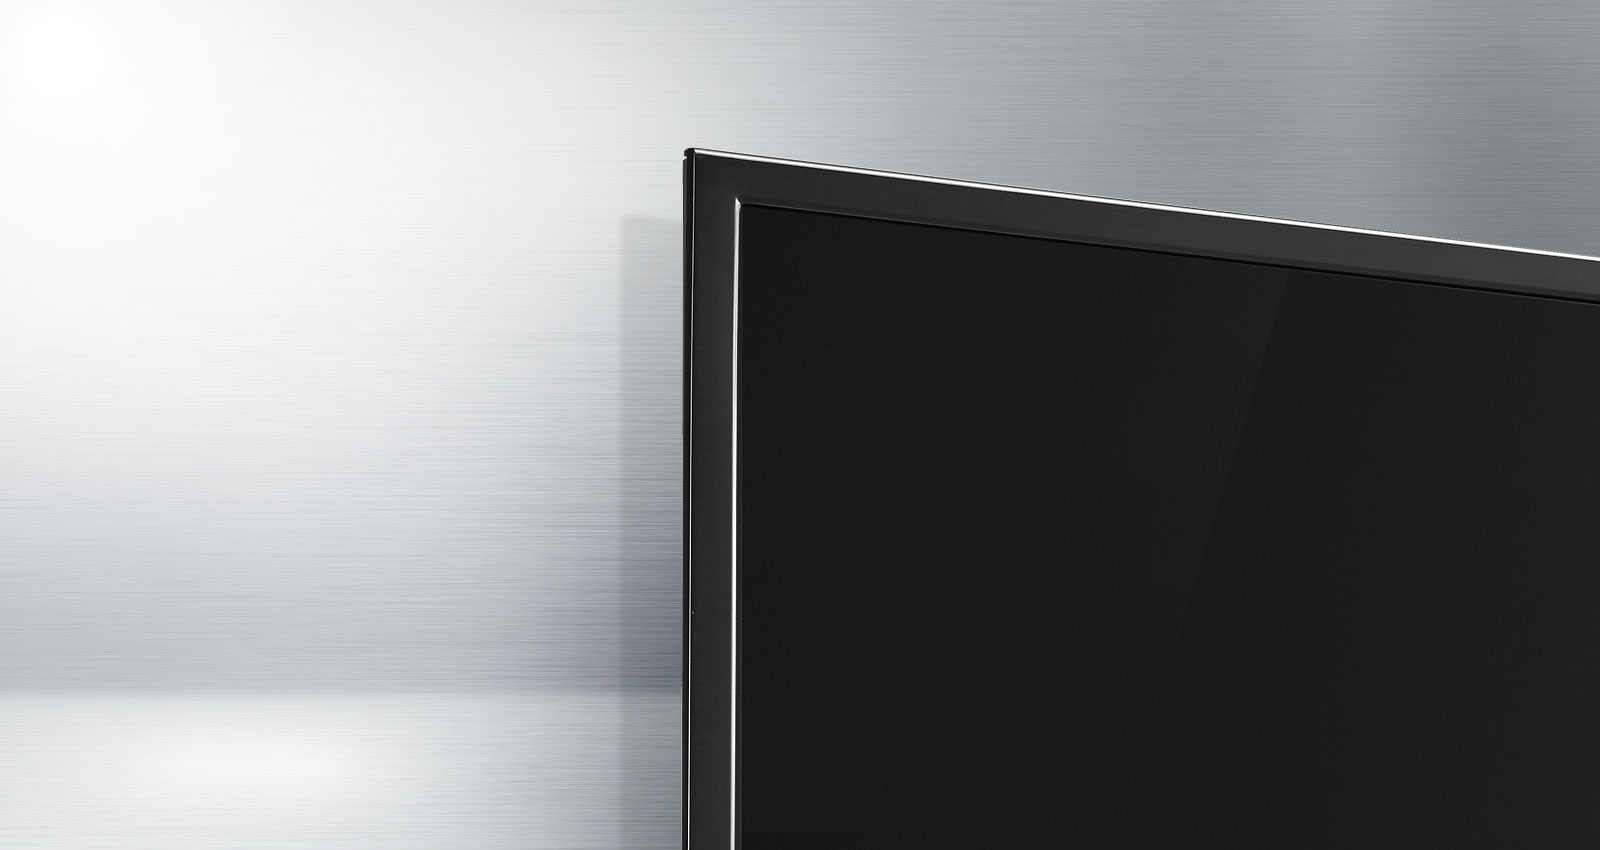 تلویزیون هوشمند ال جی LED TV Smart LG 43LH59000GI - سایز 43 اینچ